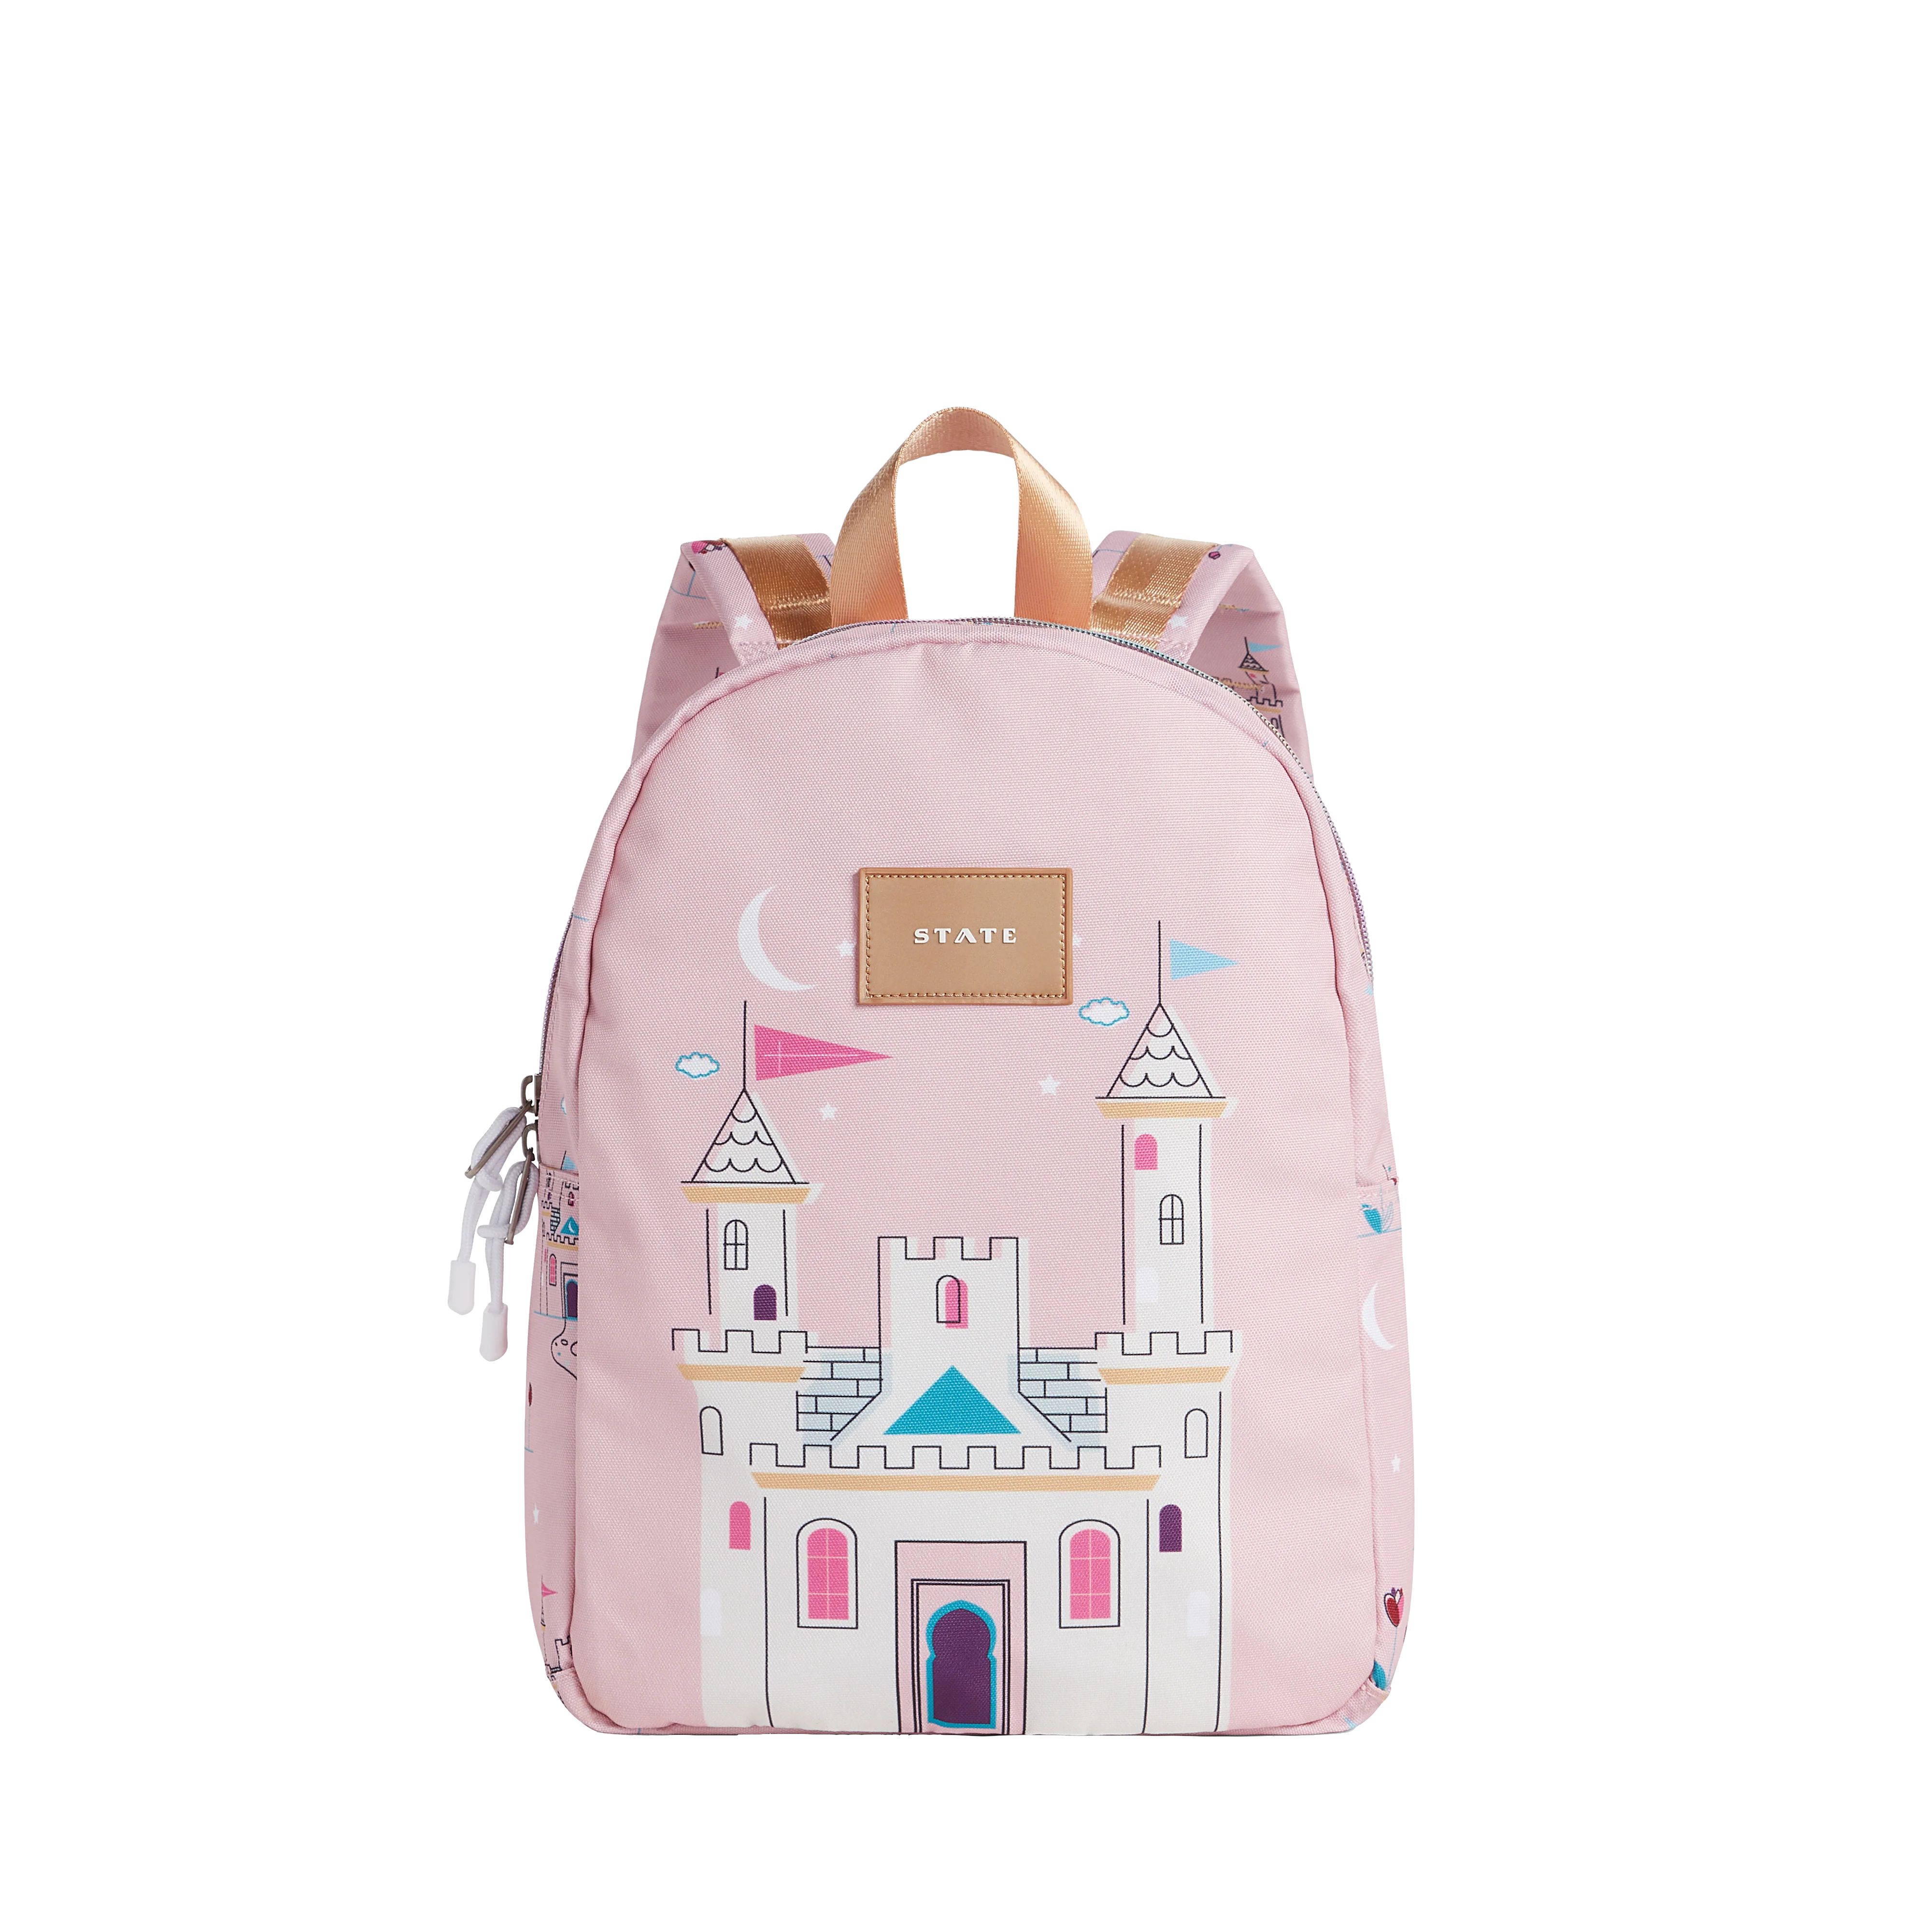 Kane Kids Mini Travel Backpack Printed Canvas Fairytale | STATE Bags